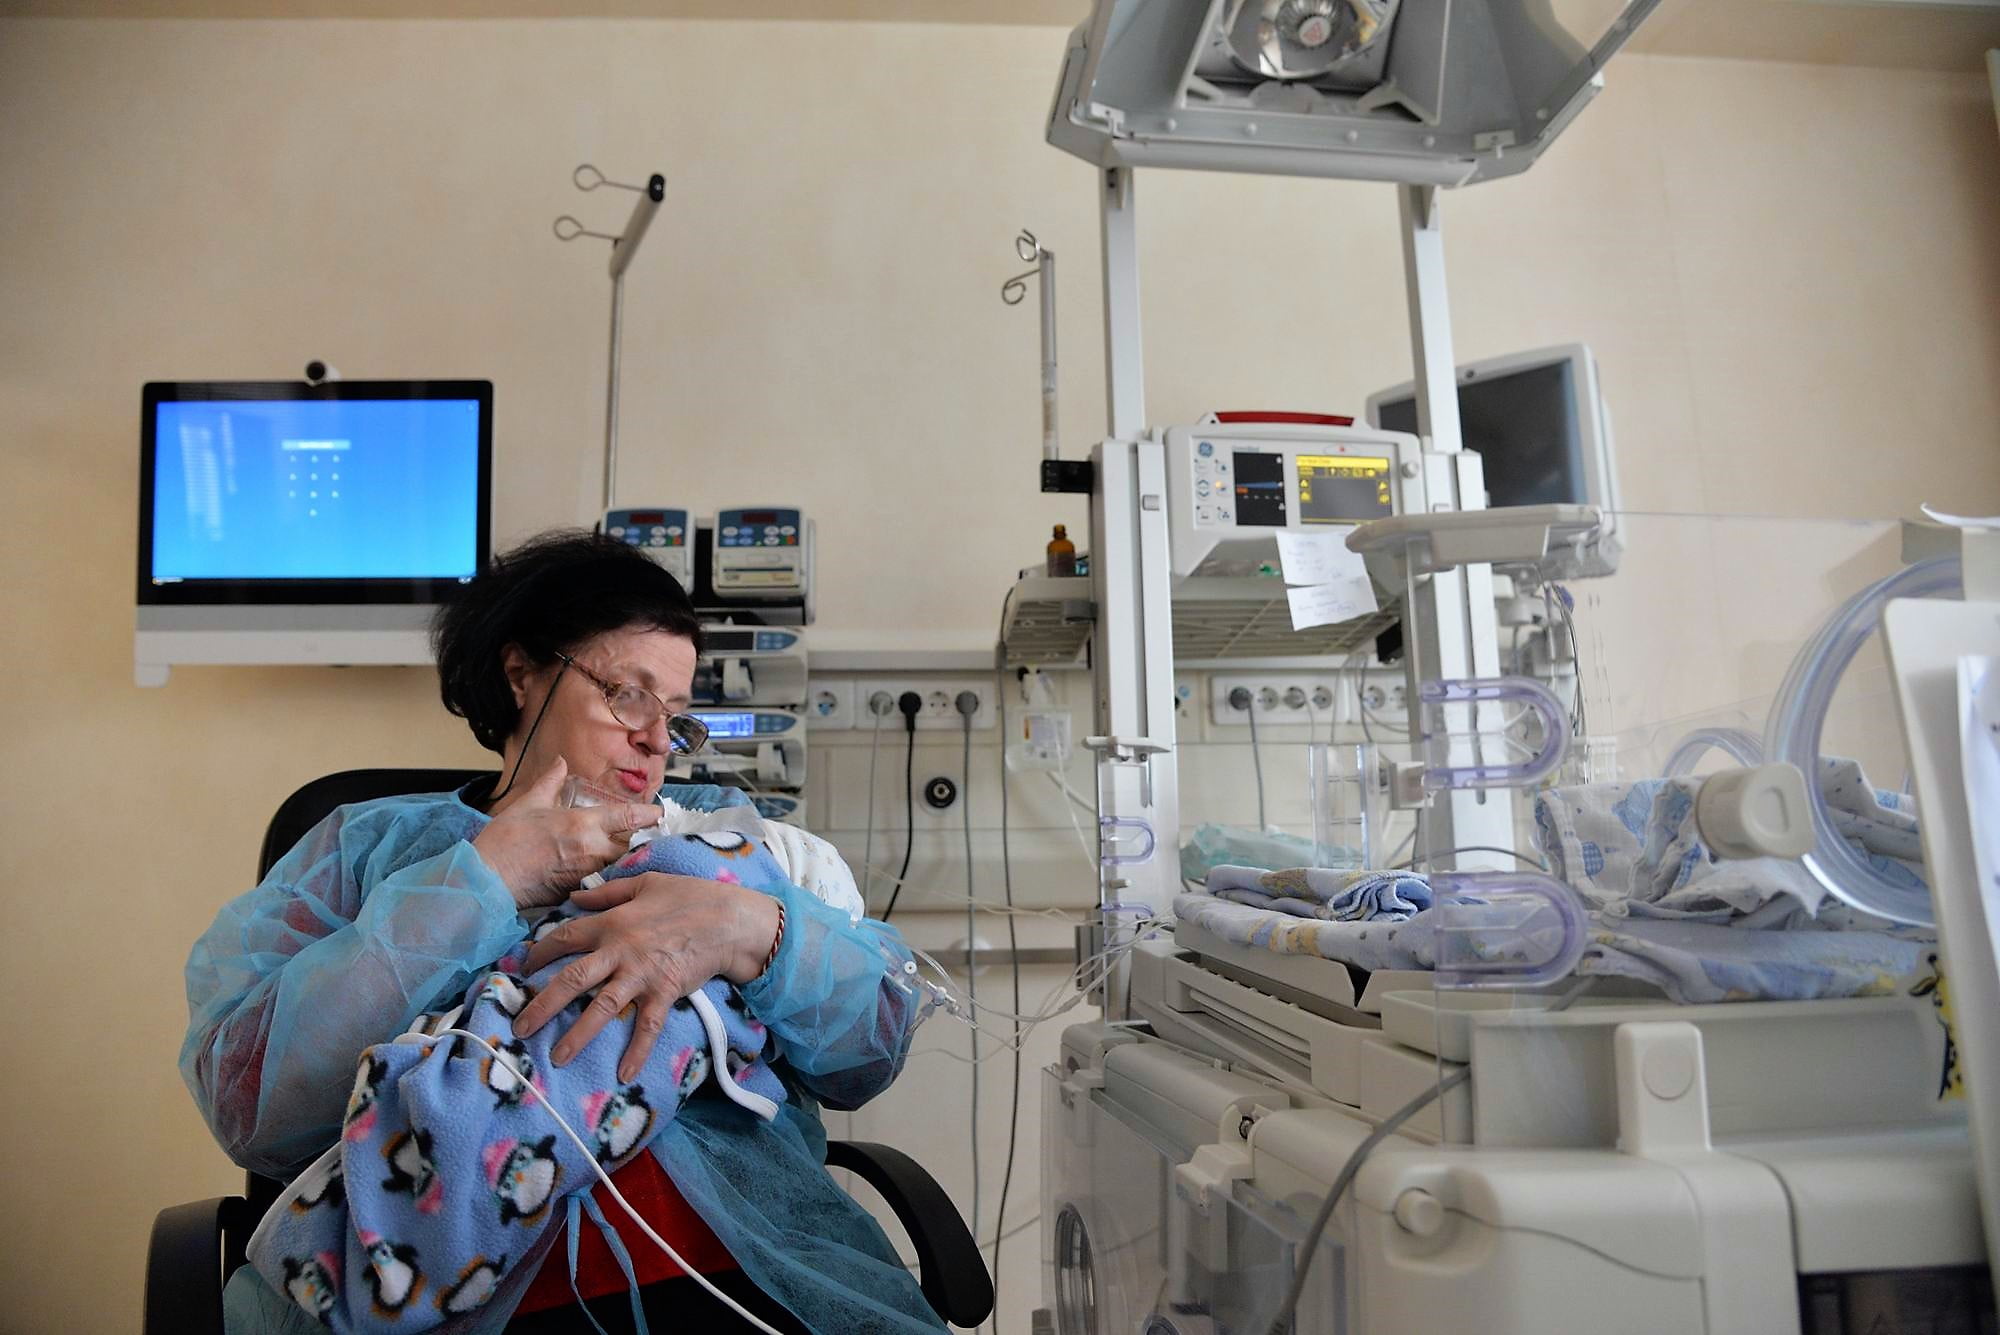 Bunicile voluntare ofera iubire nou-nascutilor bolnaviori si abandonati: "Ii schimbam, le dam sa manance, le cantam... " | Demamici.ro